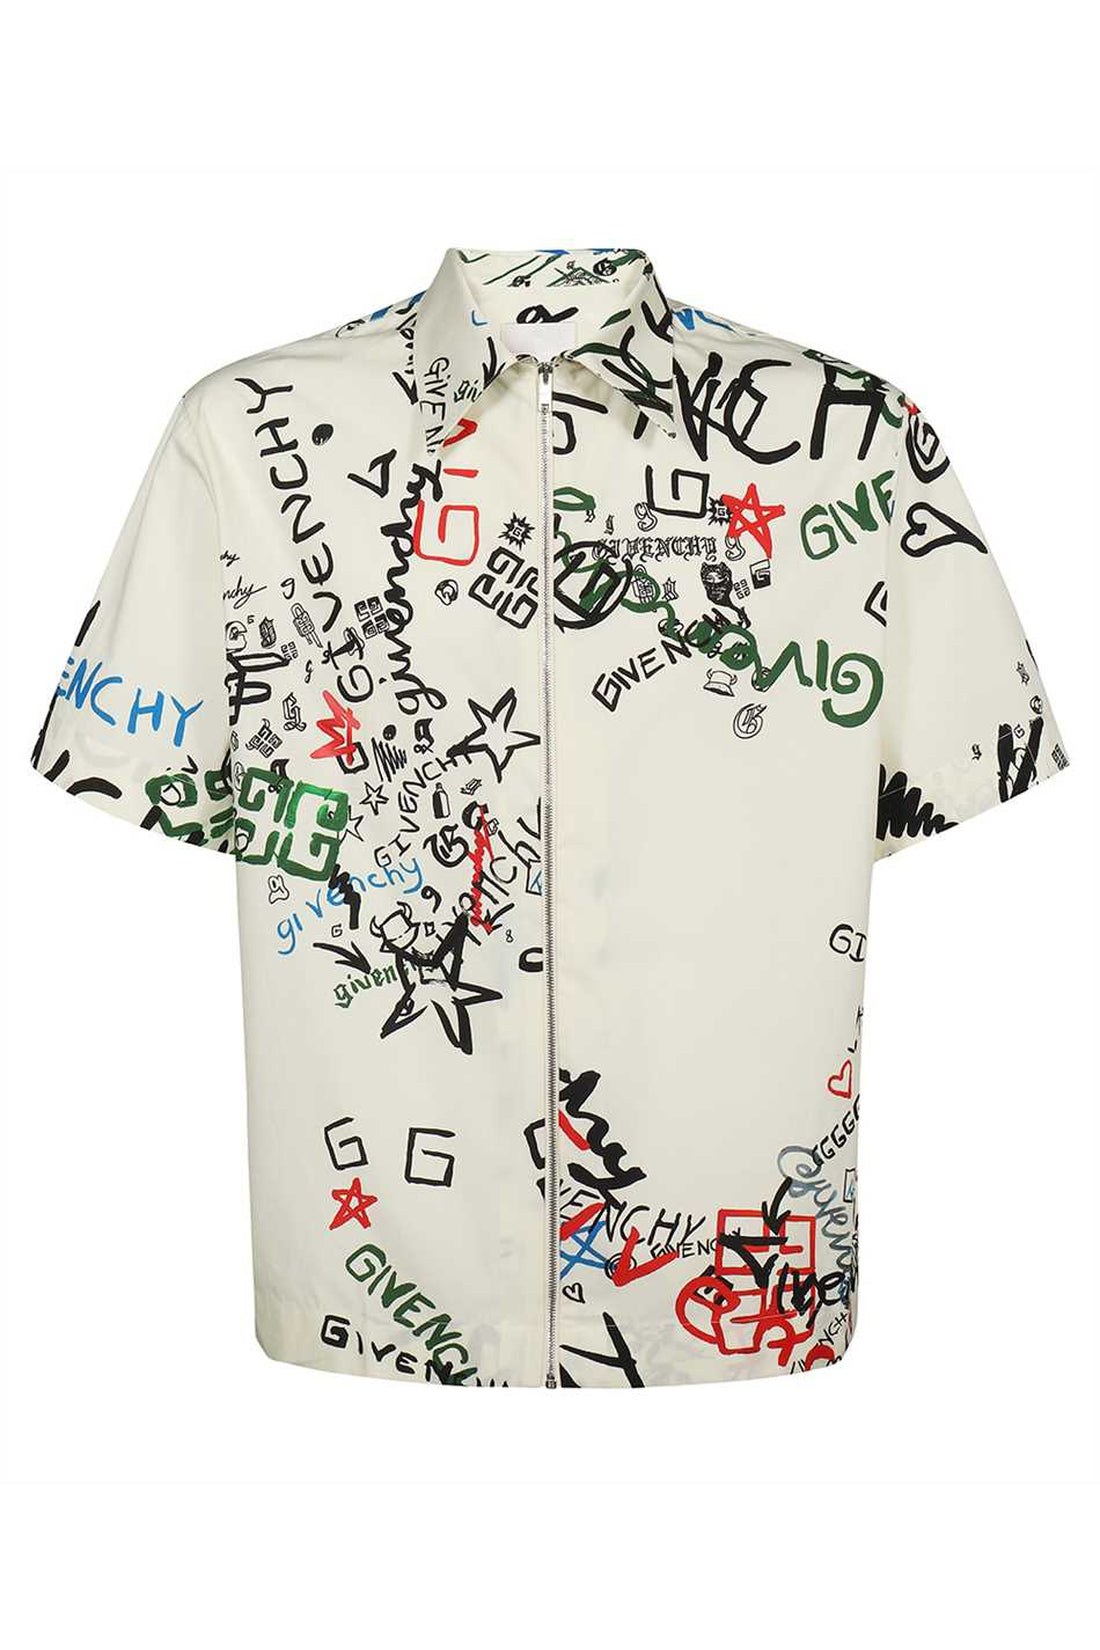 Givenchy-OUTLET-SALE-Printed cotton shirt-ARCHIVIST